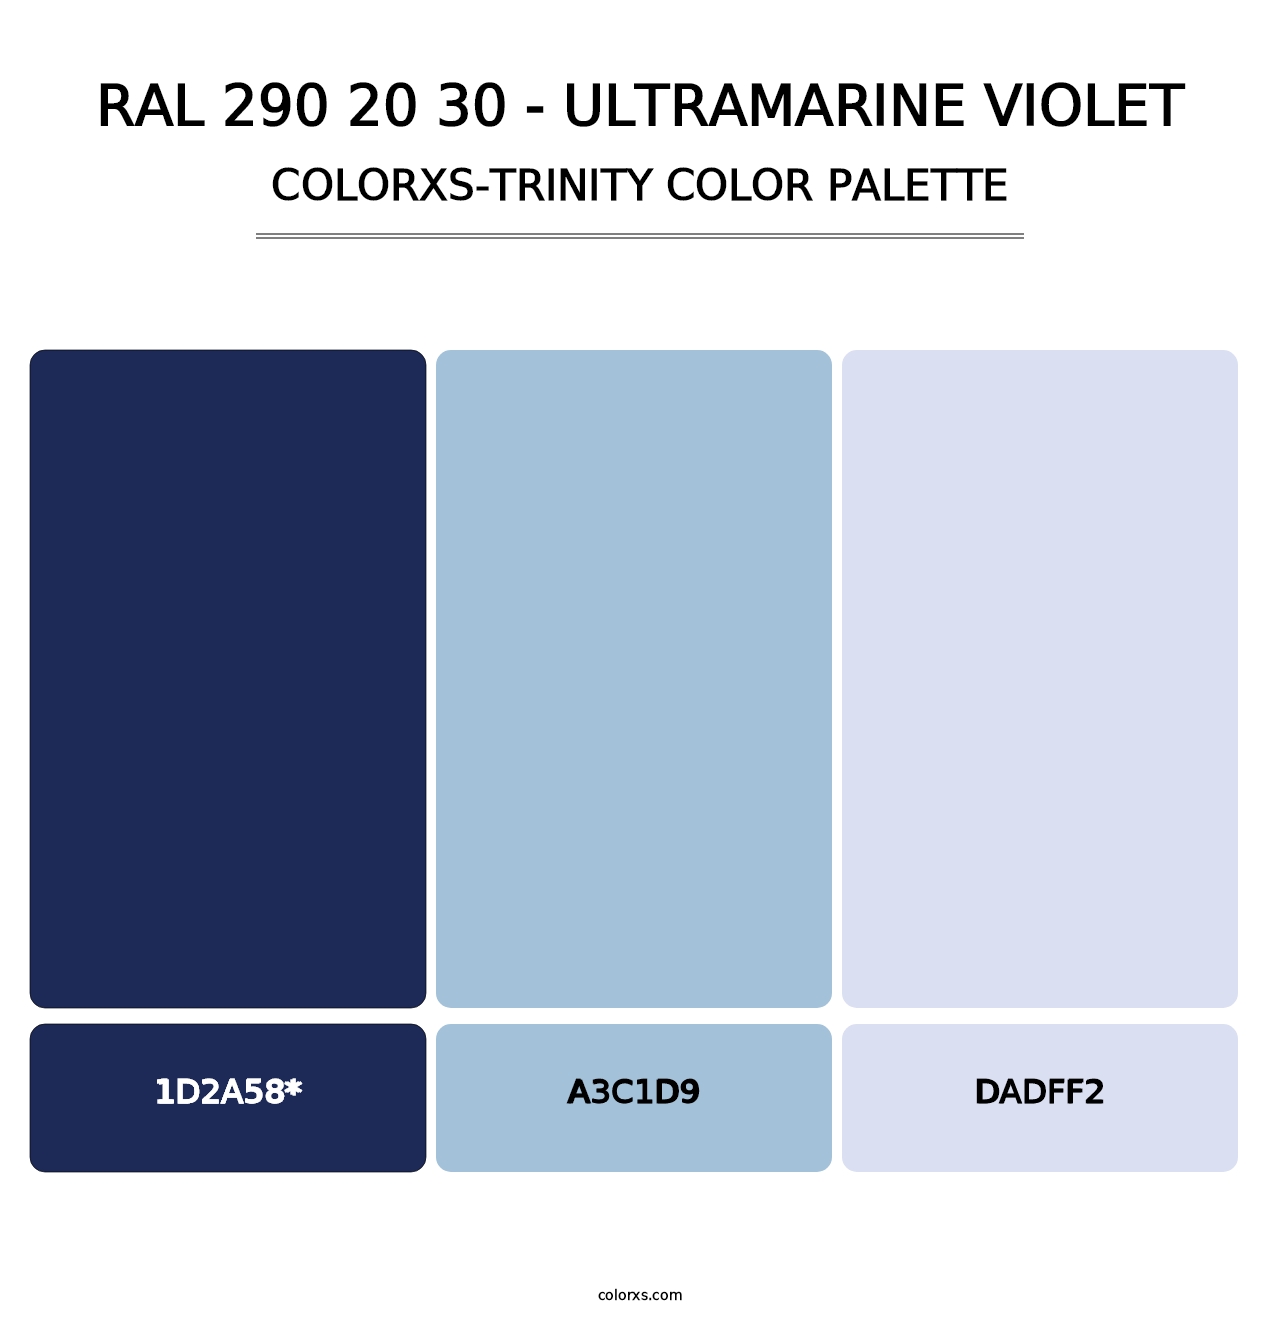 RAL 290 20 30 - Ultramarine Violet - Colorxs Trinity Palette